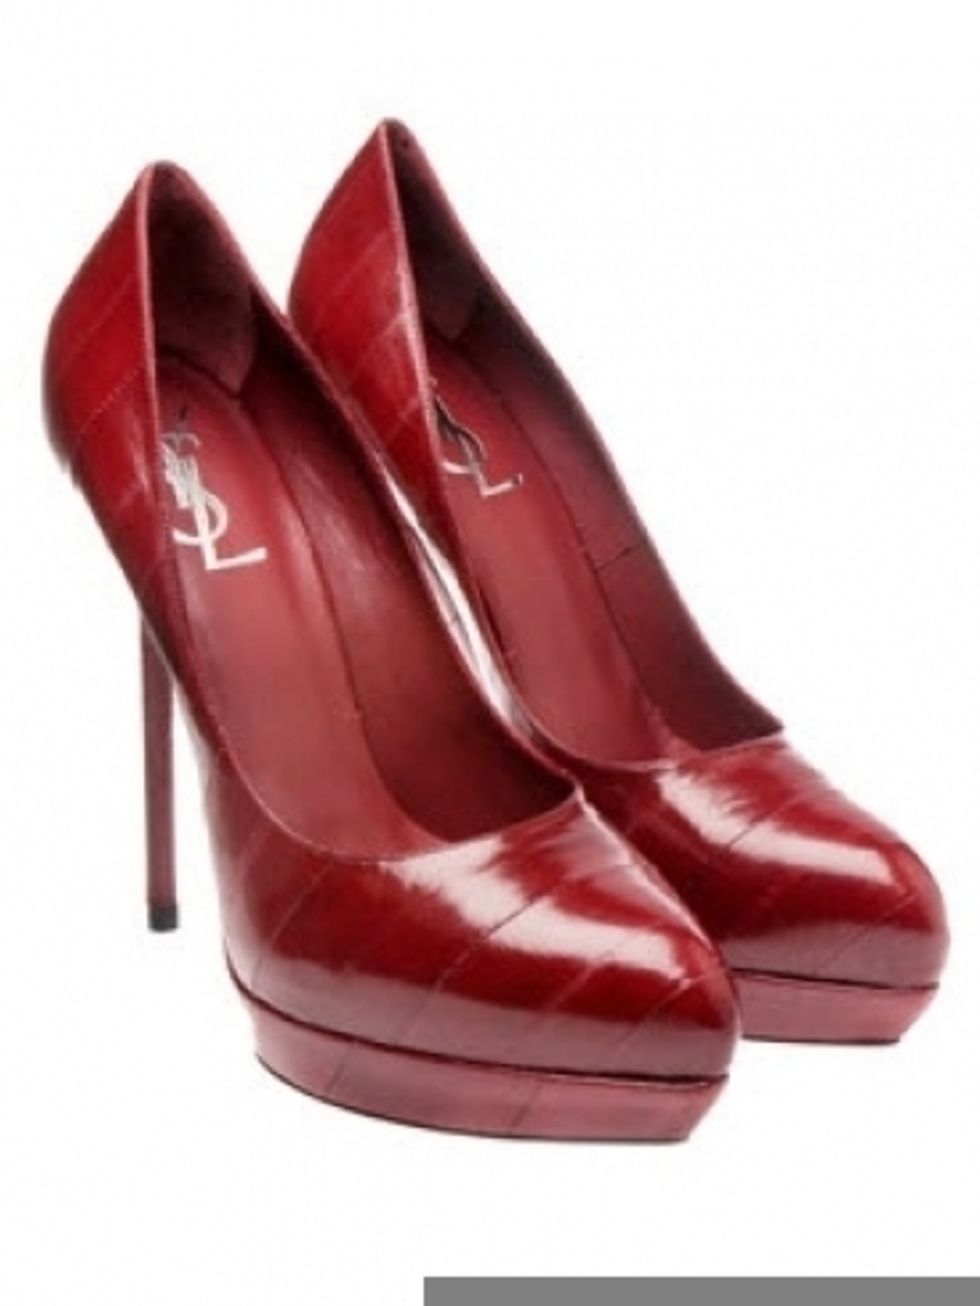 Footwear, Brown, Product, Red, Carmine, Maroon, Beauty, Tan, High heels, Leather, 